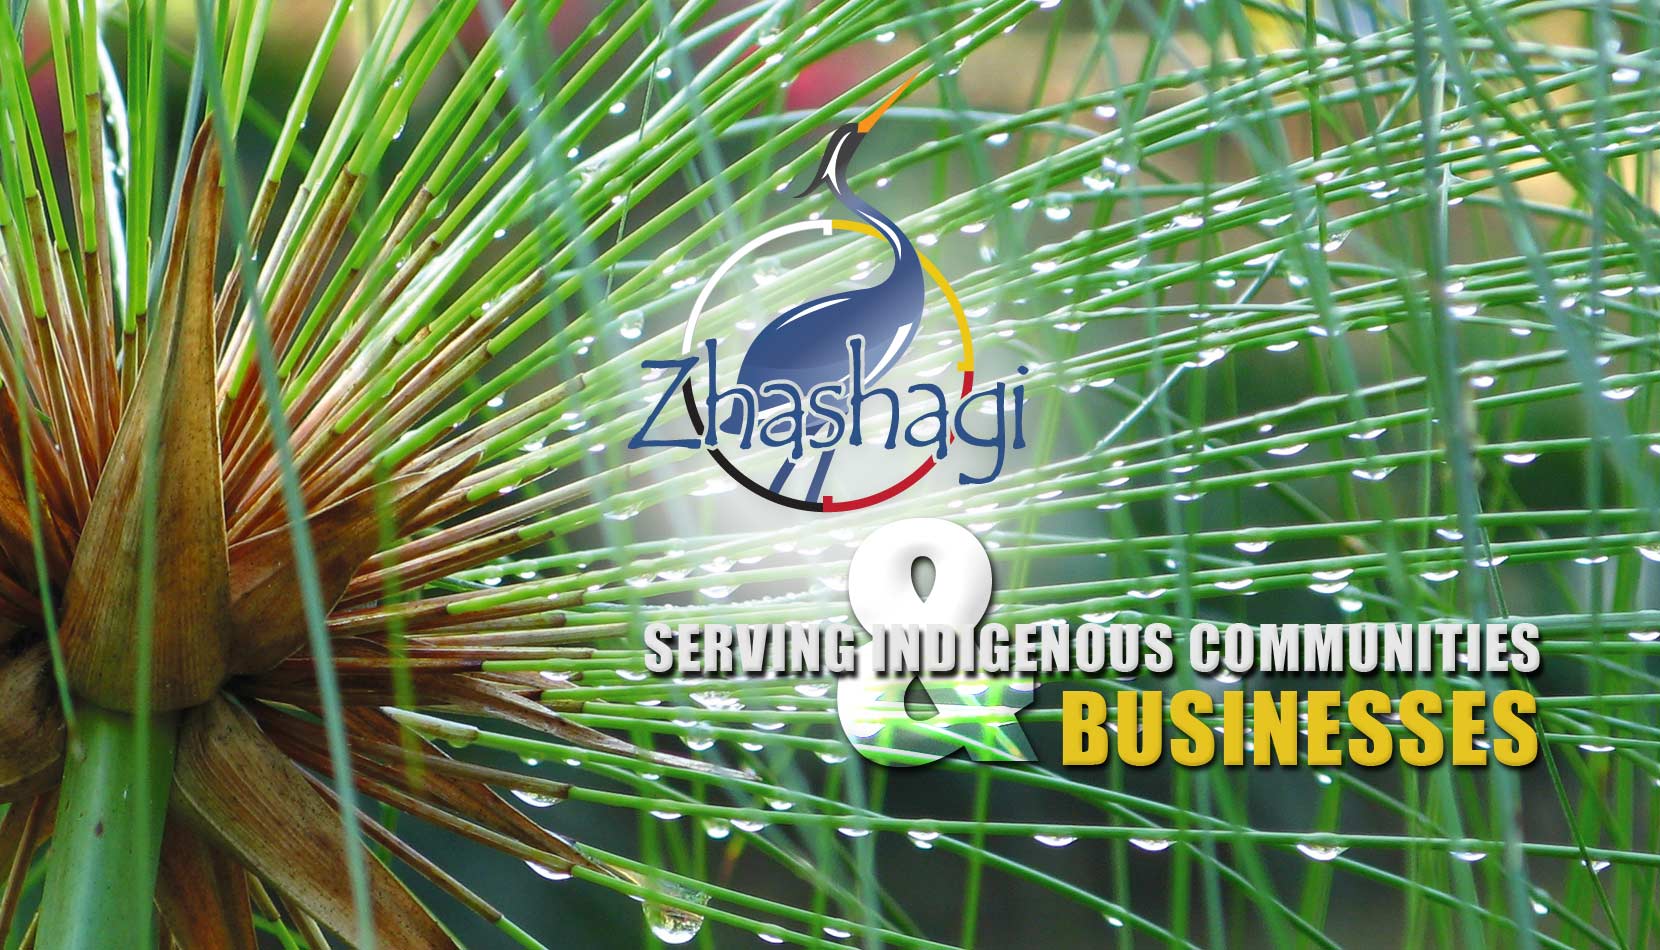 Zhashagi is Serving Indigenous Communities and Businesses